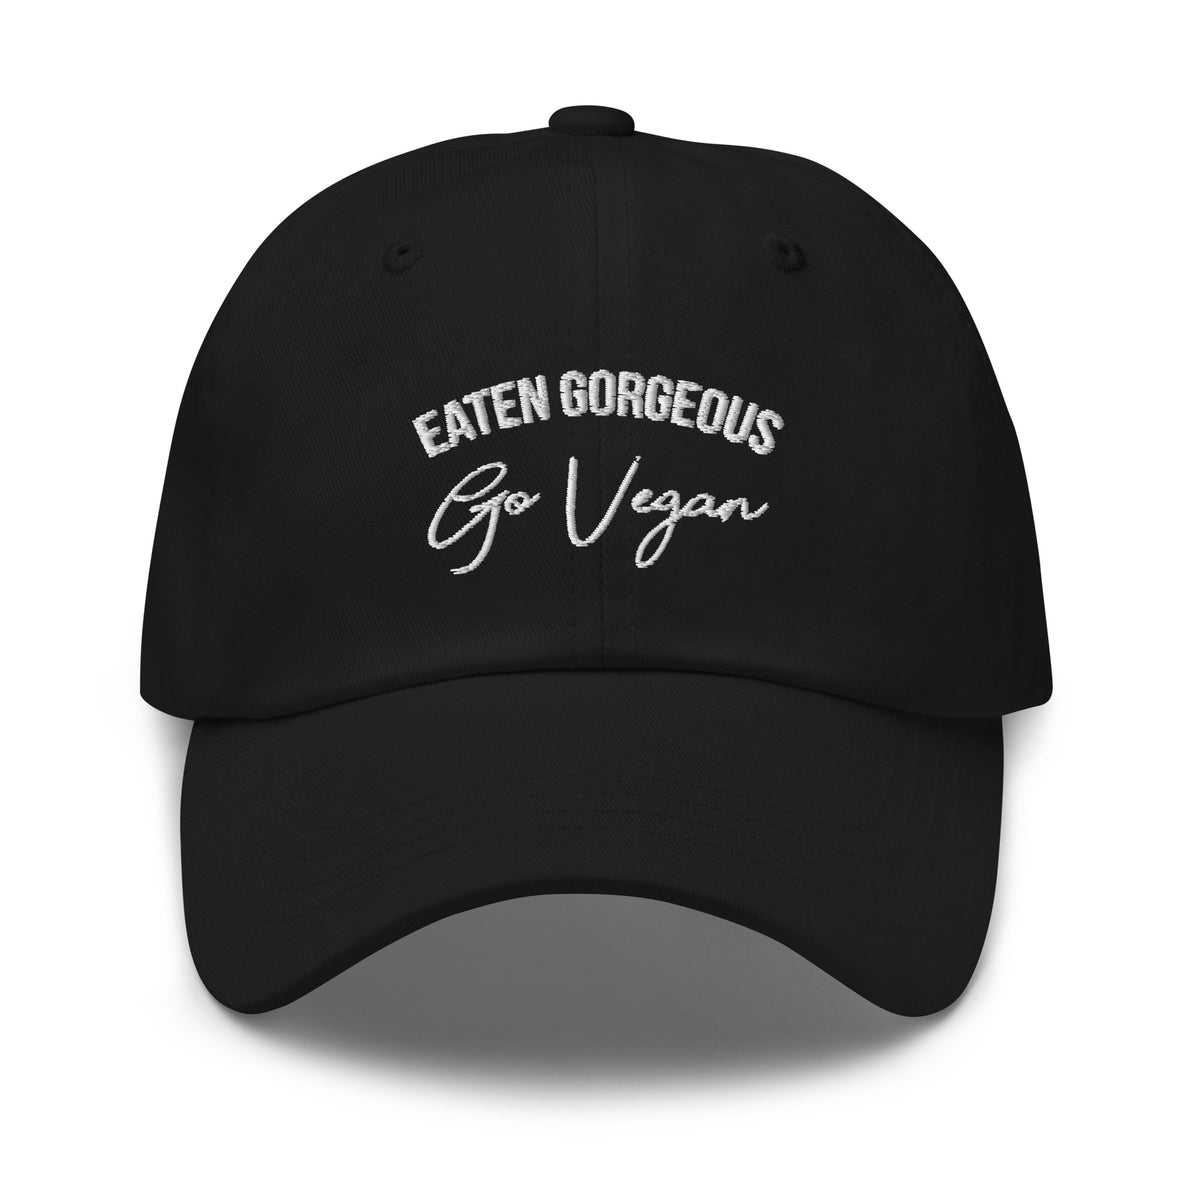 EATEN GORGEOUS GO VEGAN Dad hat